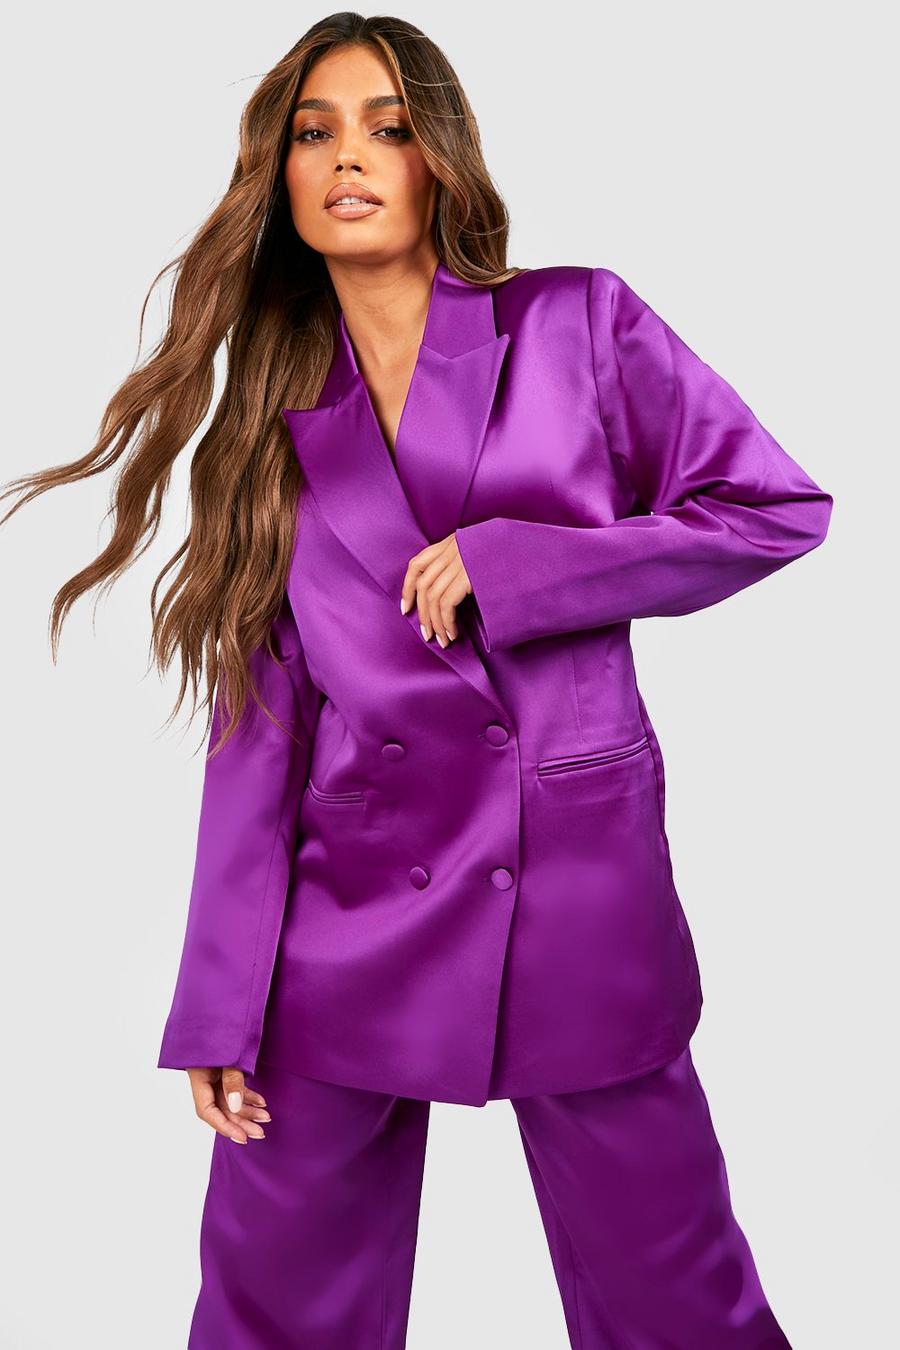 Jewel purple violet Premium Satin Double Breasted Blazer